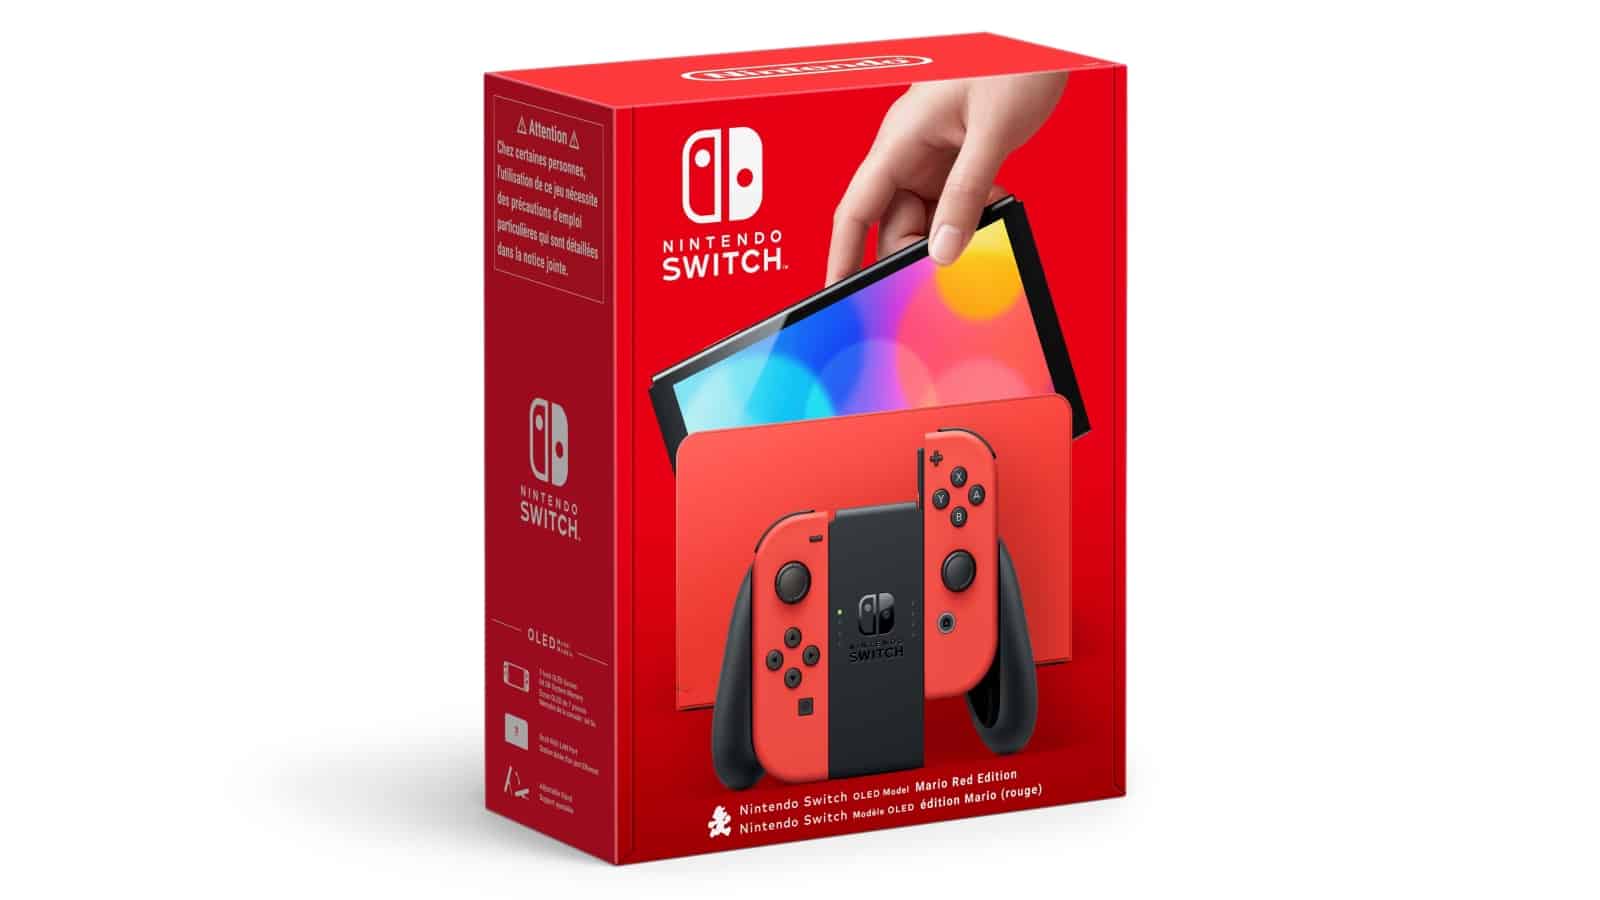 Nintendo Switch (דגם OLED) - מהדורת Mario Red